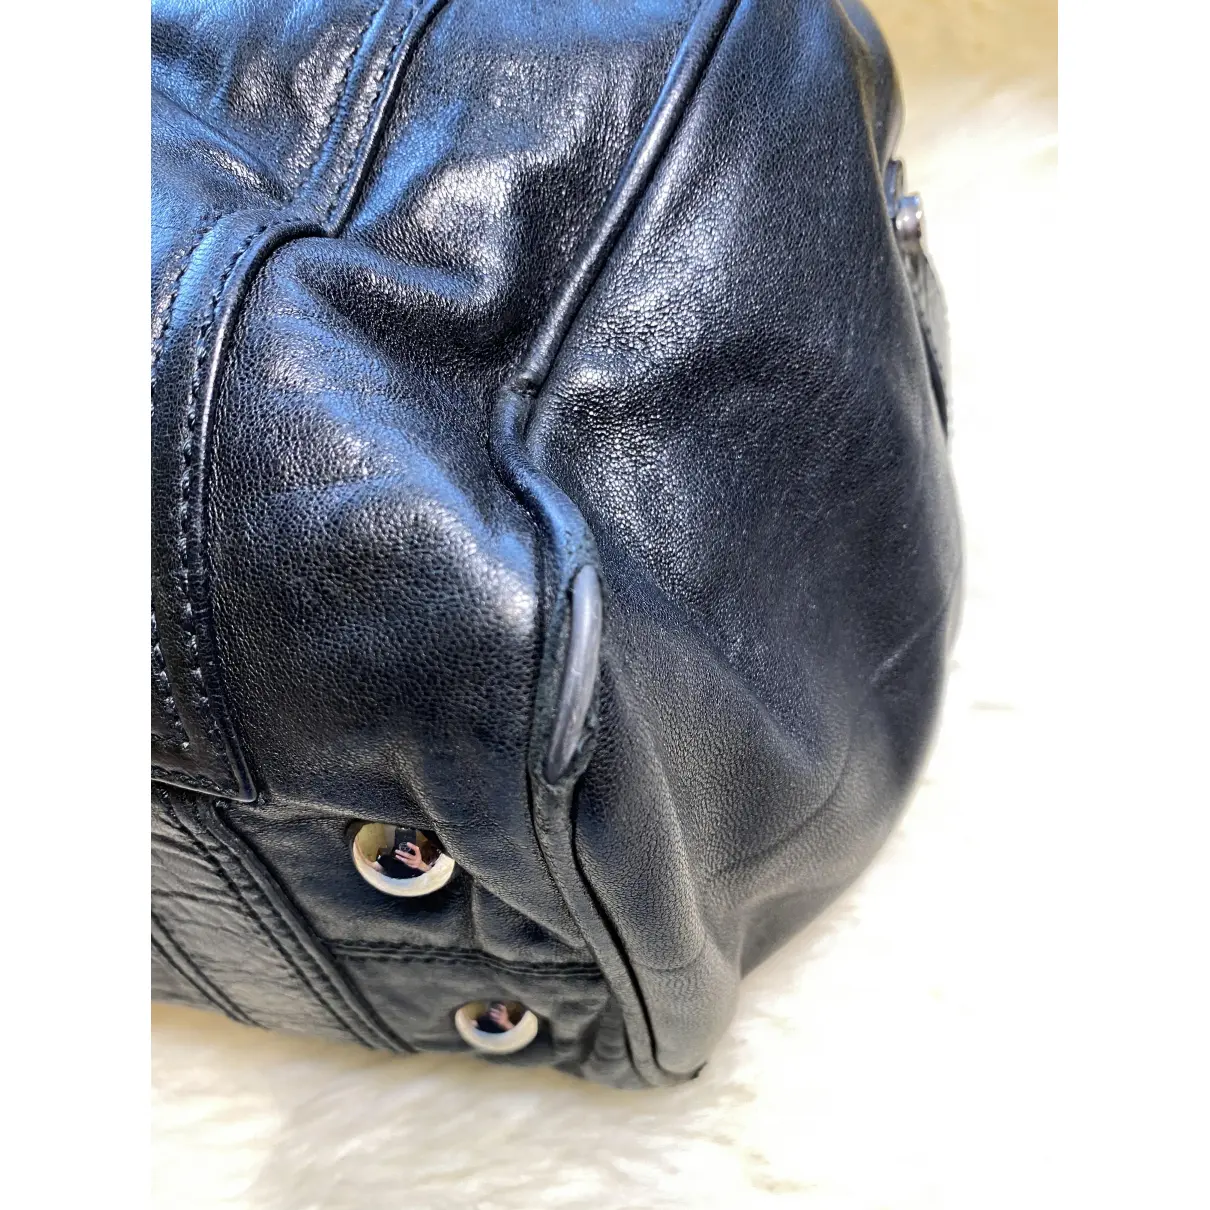 Buy Balenciaga Leather handbag online